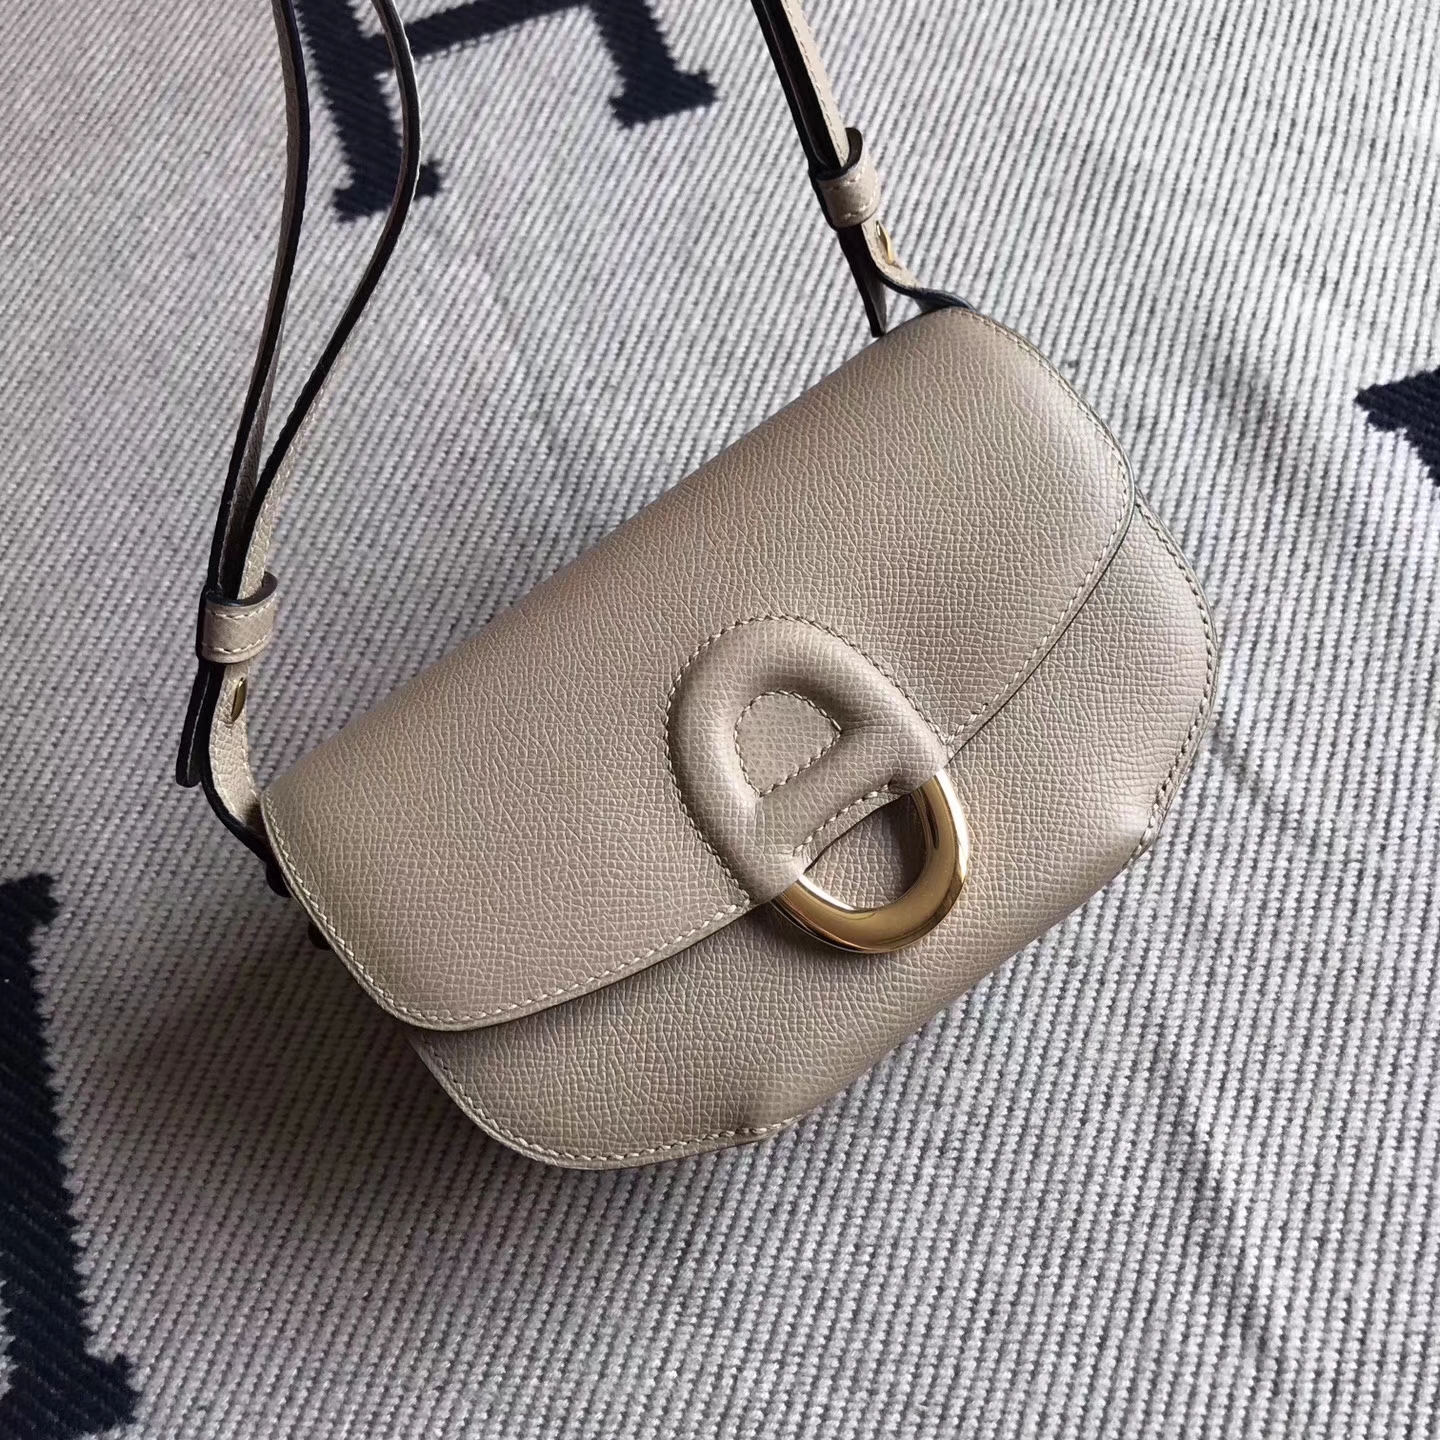 Luxury Hermes Epsom Leather Cherche Midi Bag in S2 Trench Grey